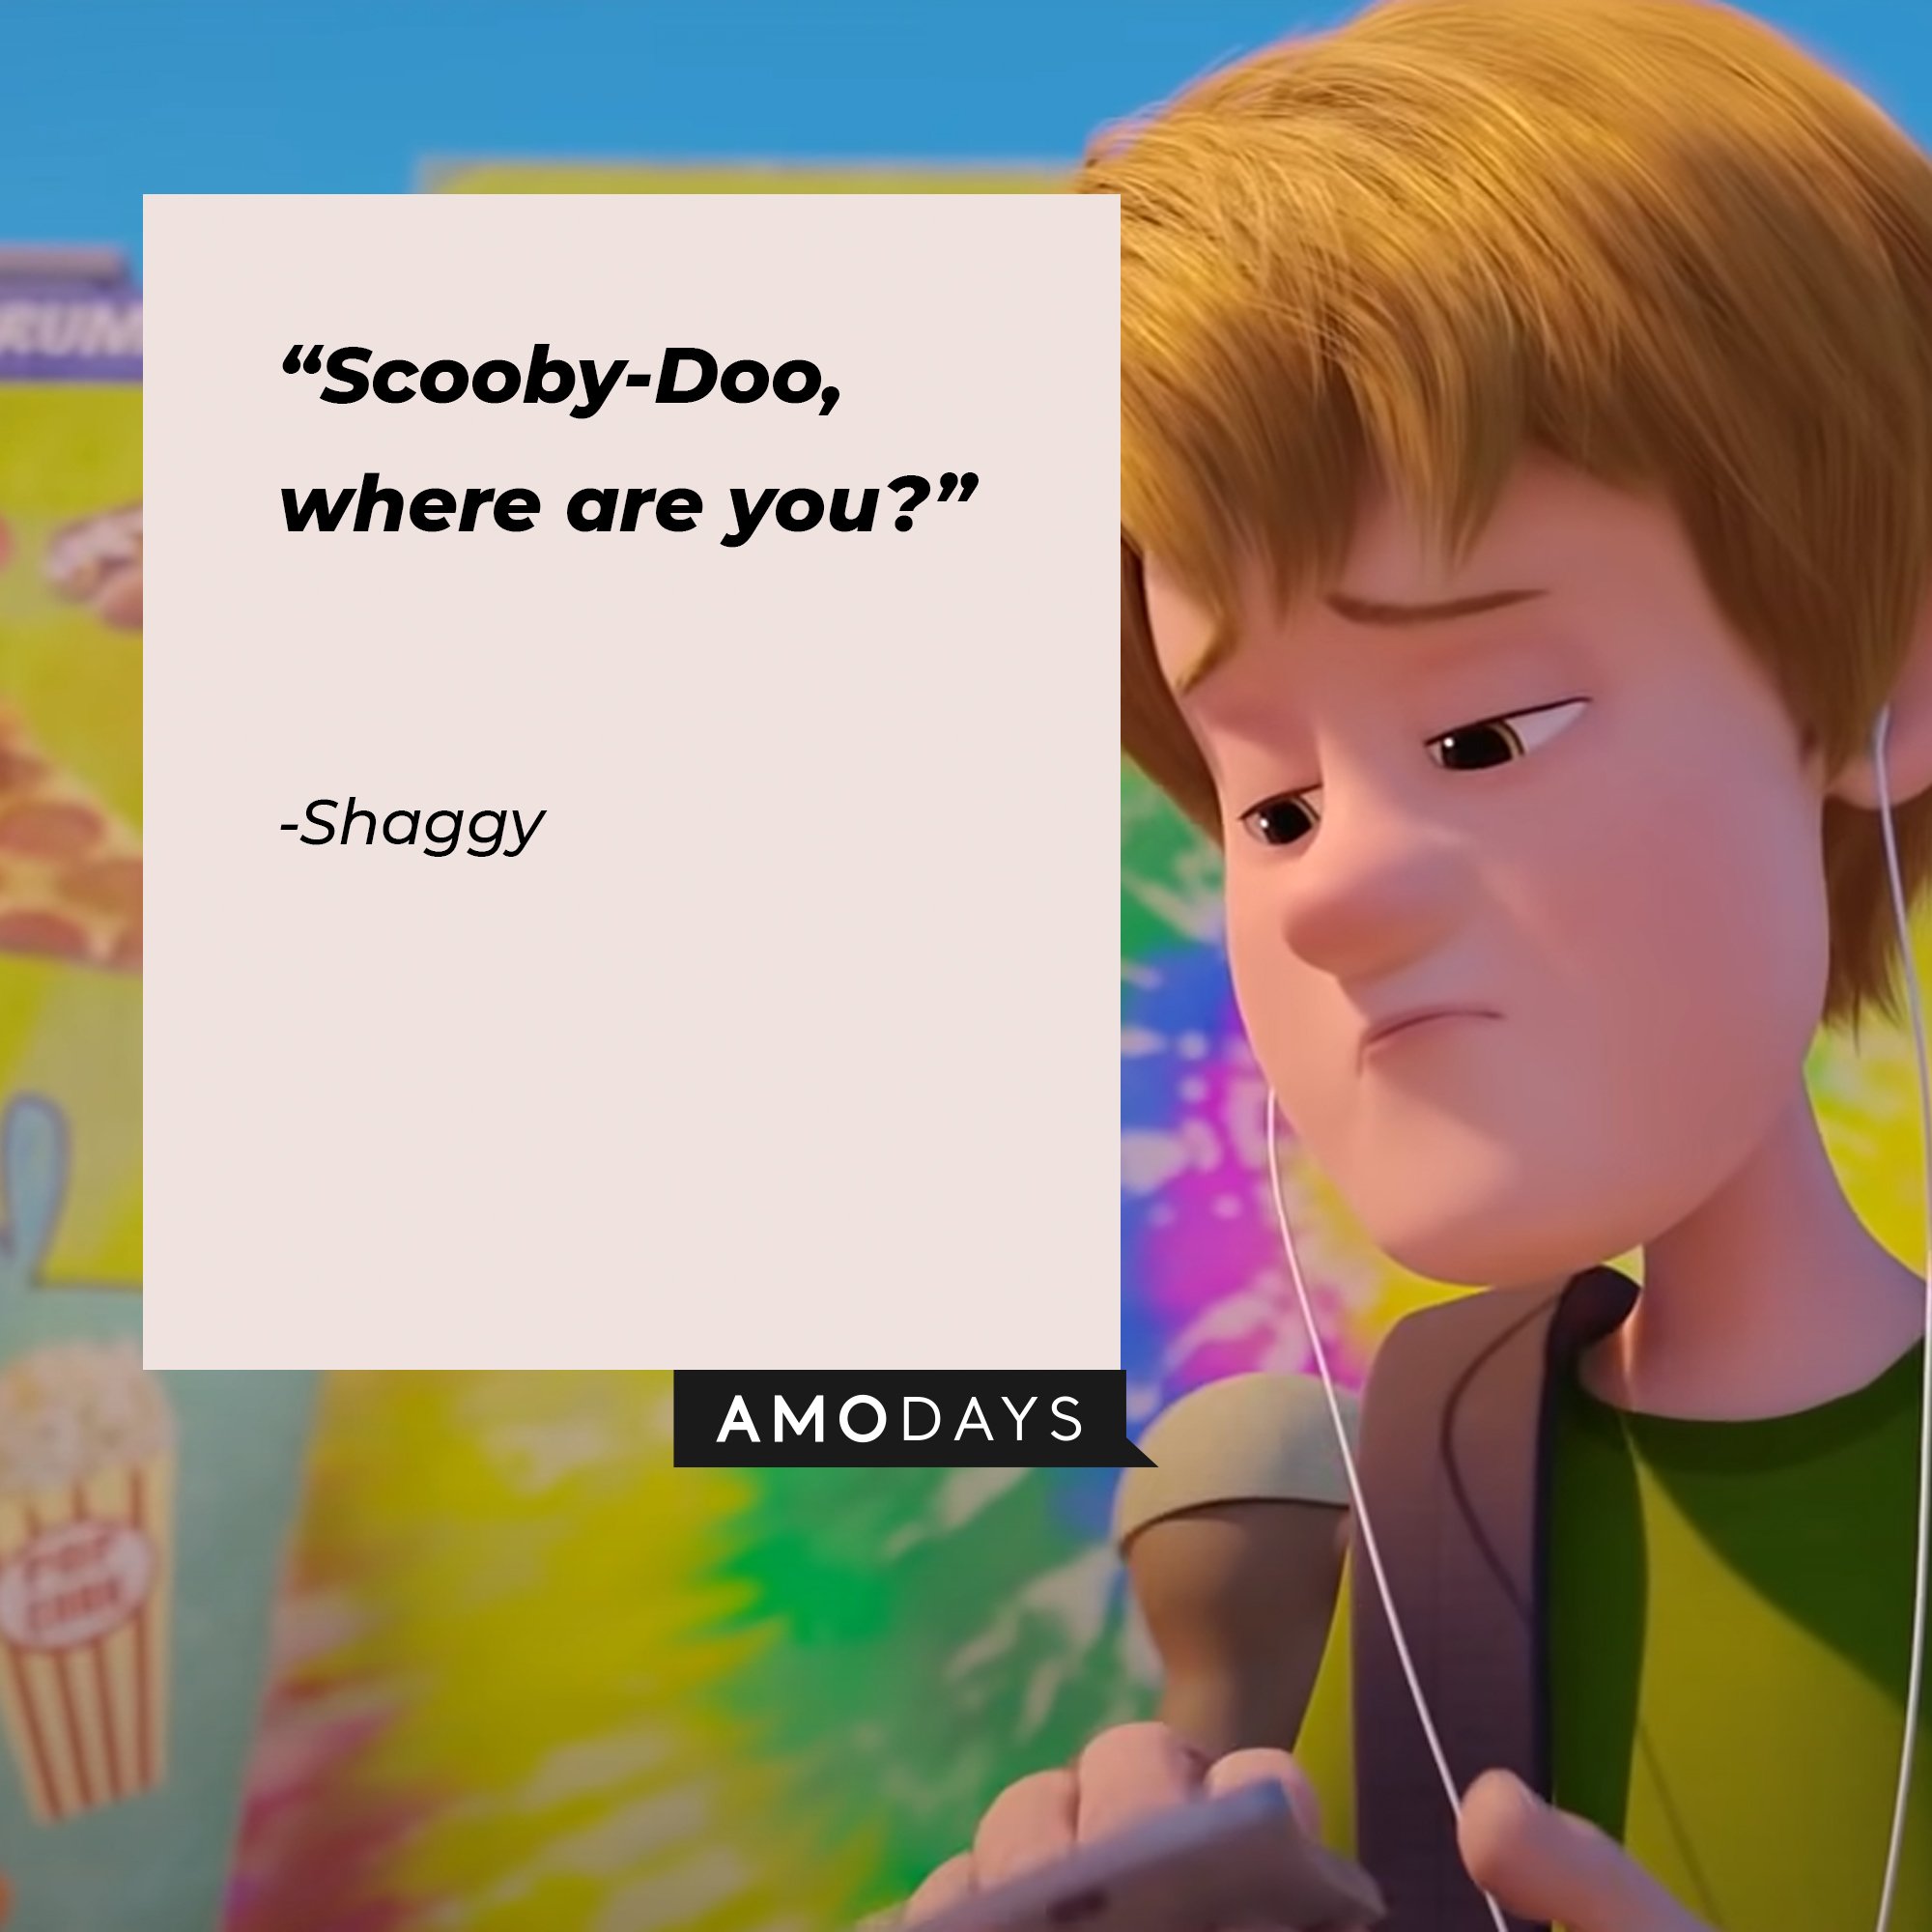  Shaggy: “Scooby-Doo, where are you?” | Image: AmoDays